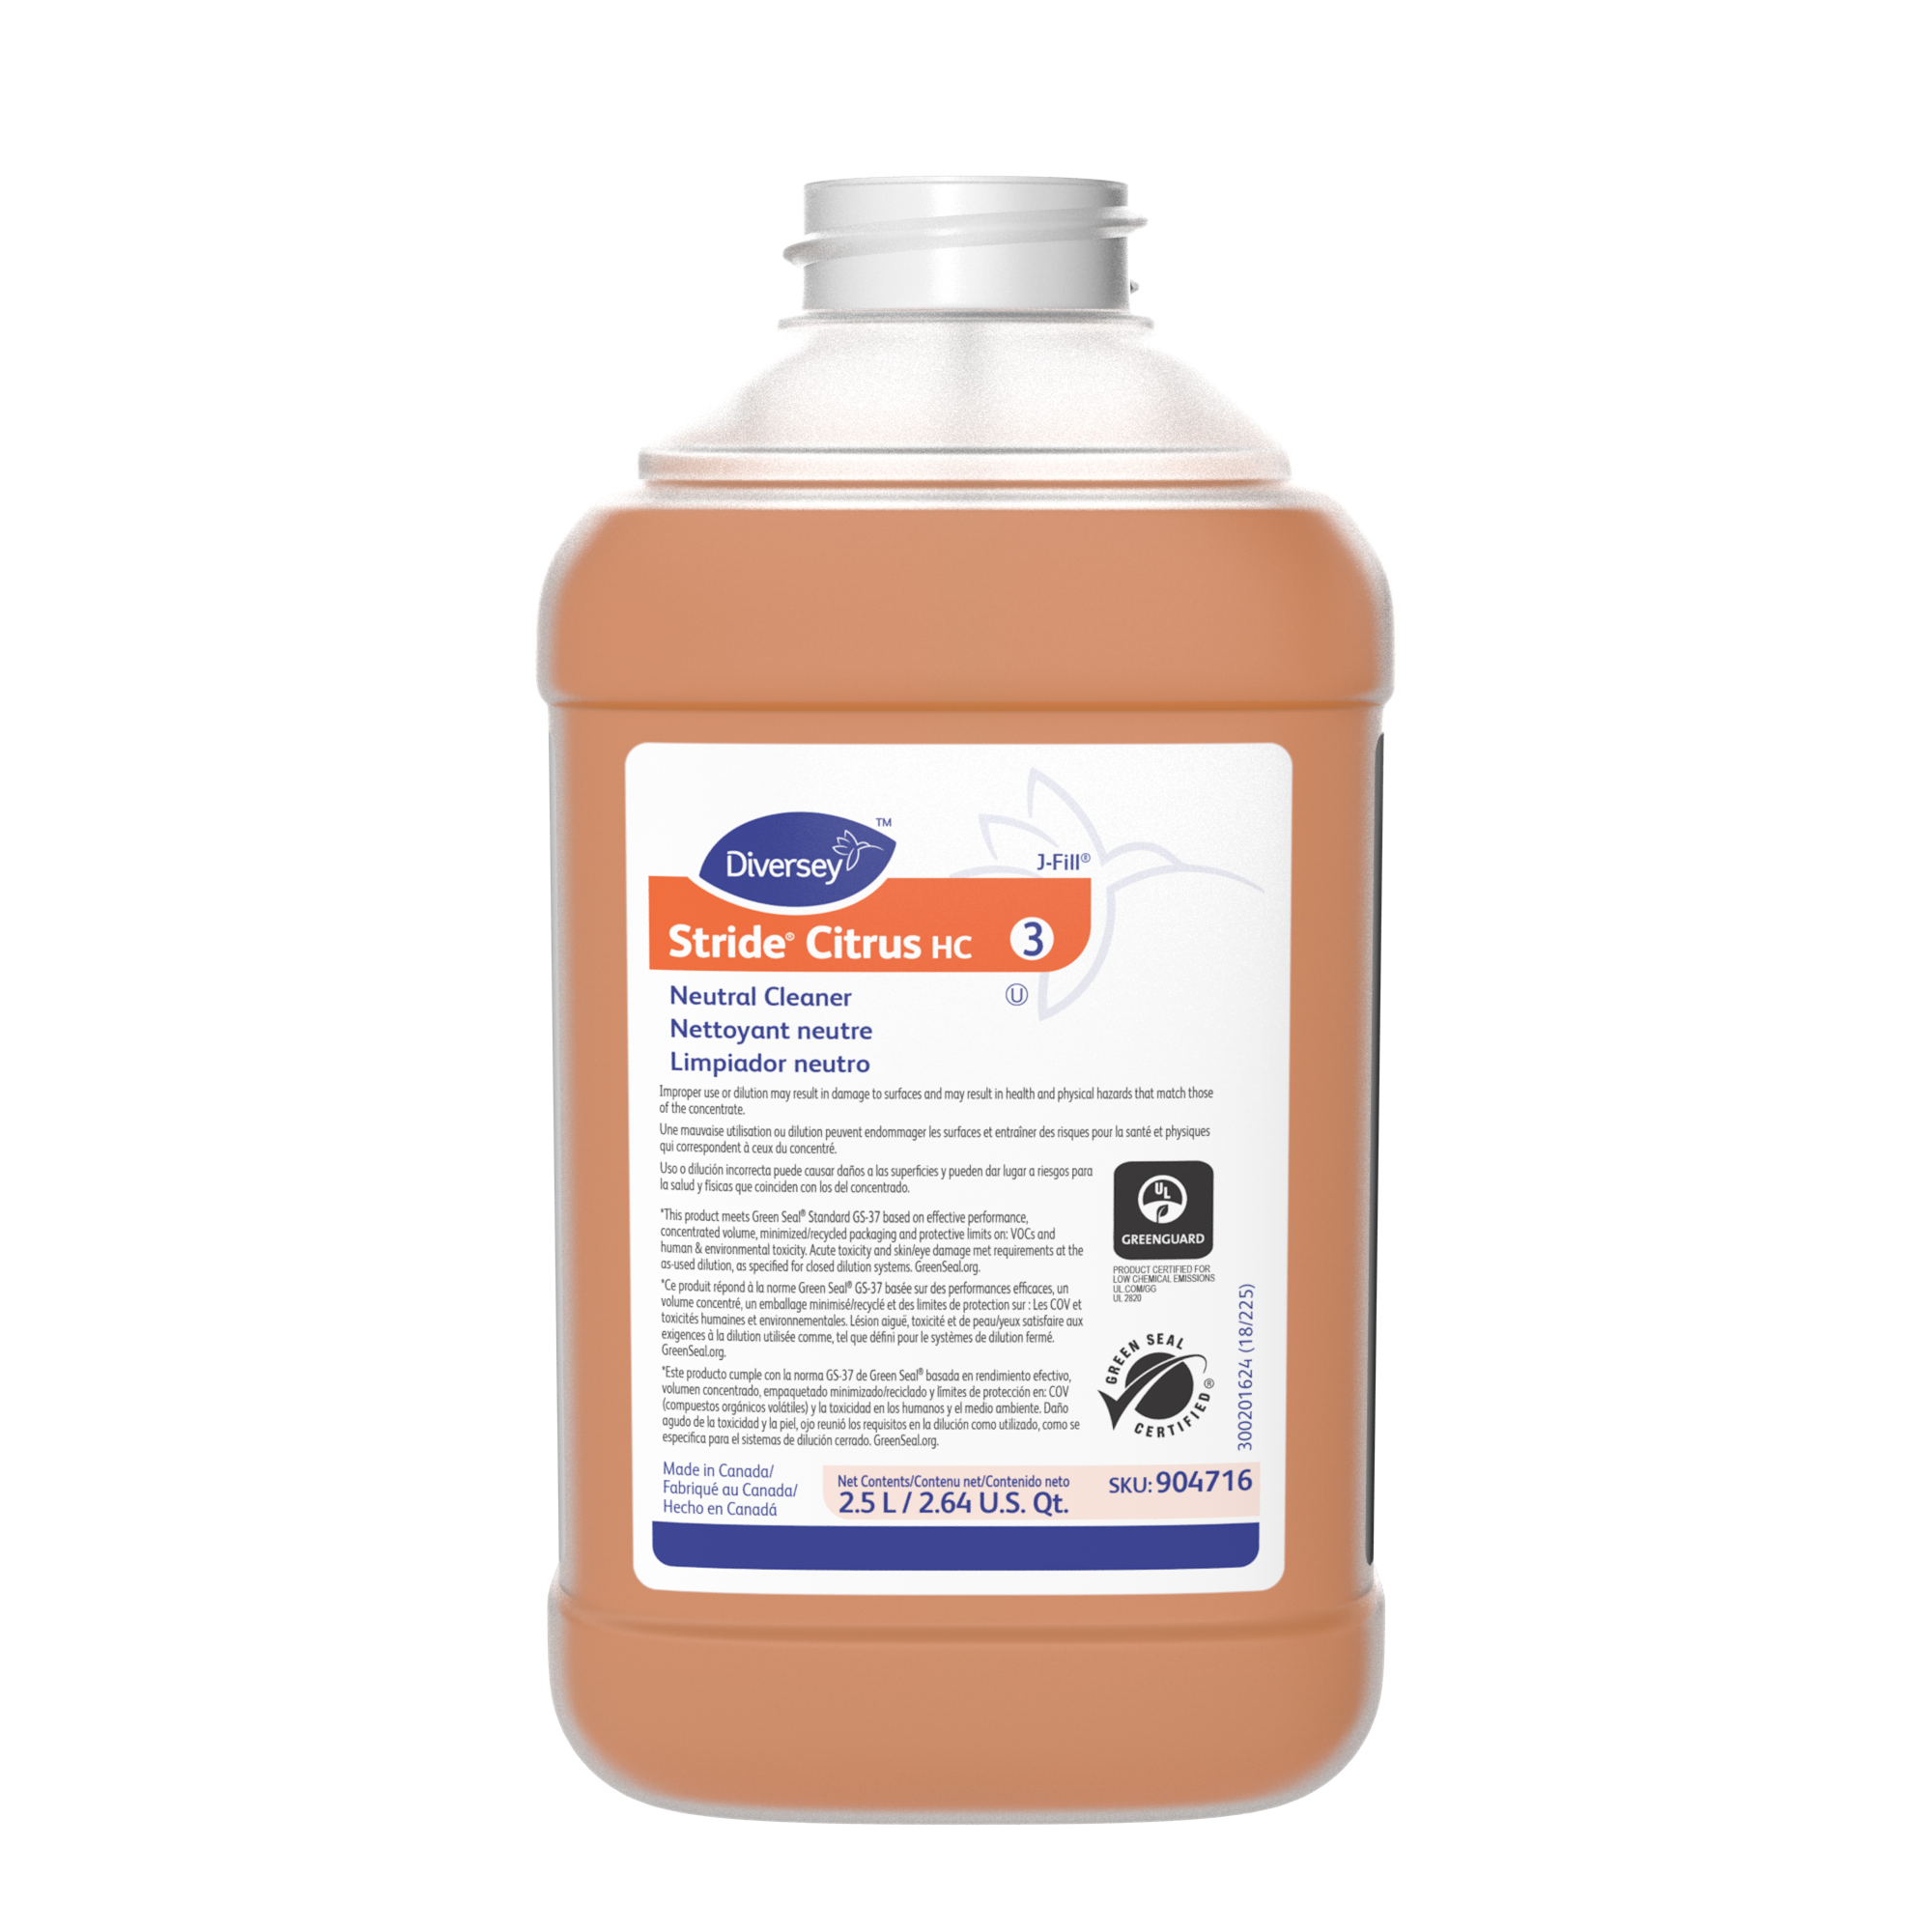 Diversey Stride Citrus Neutral Cleaner- 2.5 L J-Fill, 2/Case